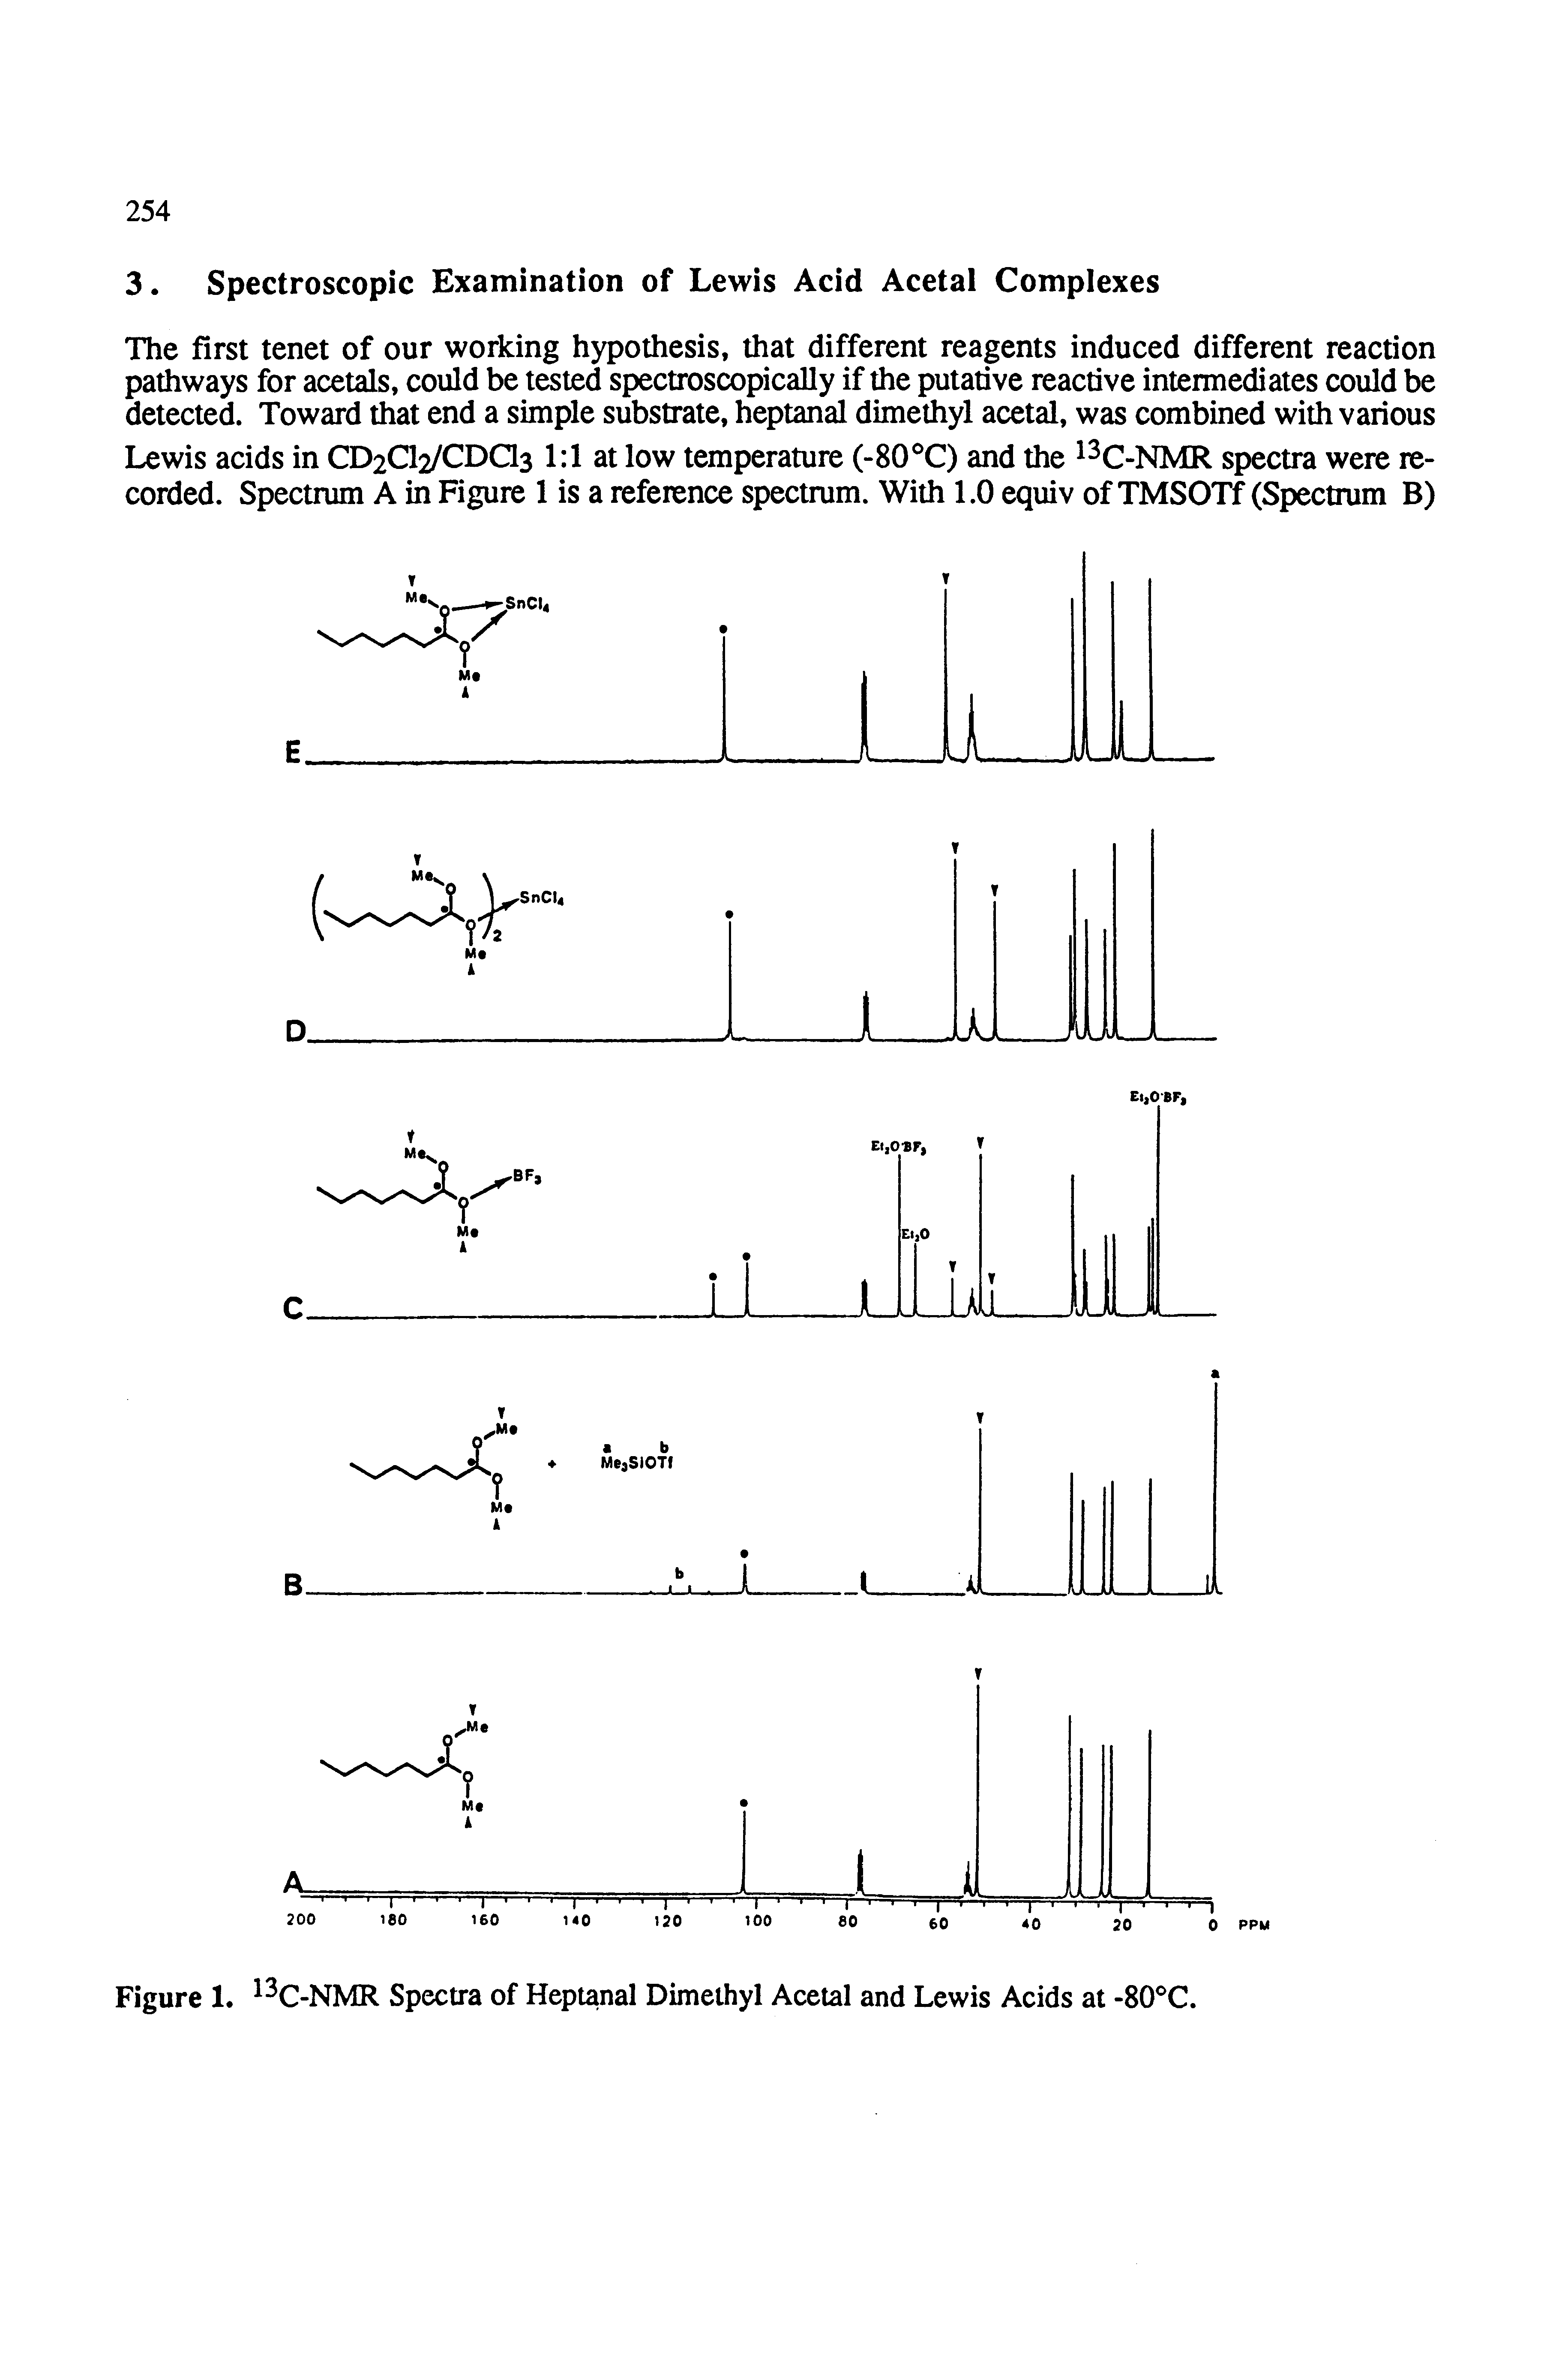 Figure 1. C-NMR Spectra of Heptanal Dimethyl Acetal and Lewis Acids at -80 C.